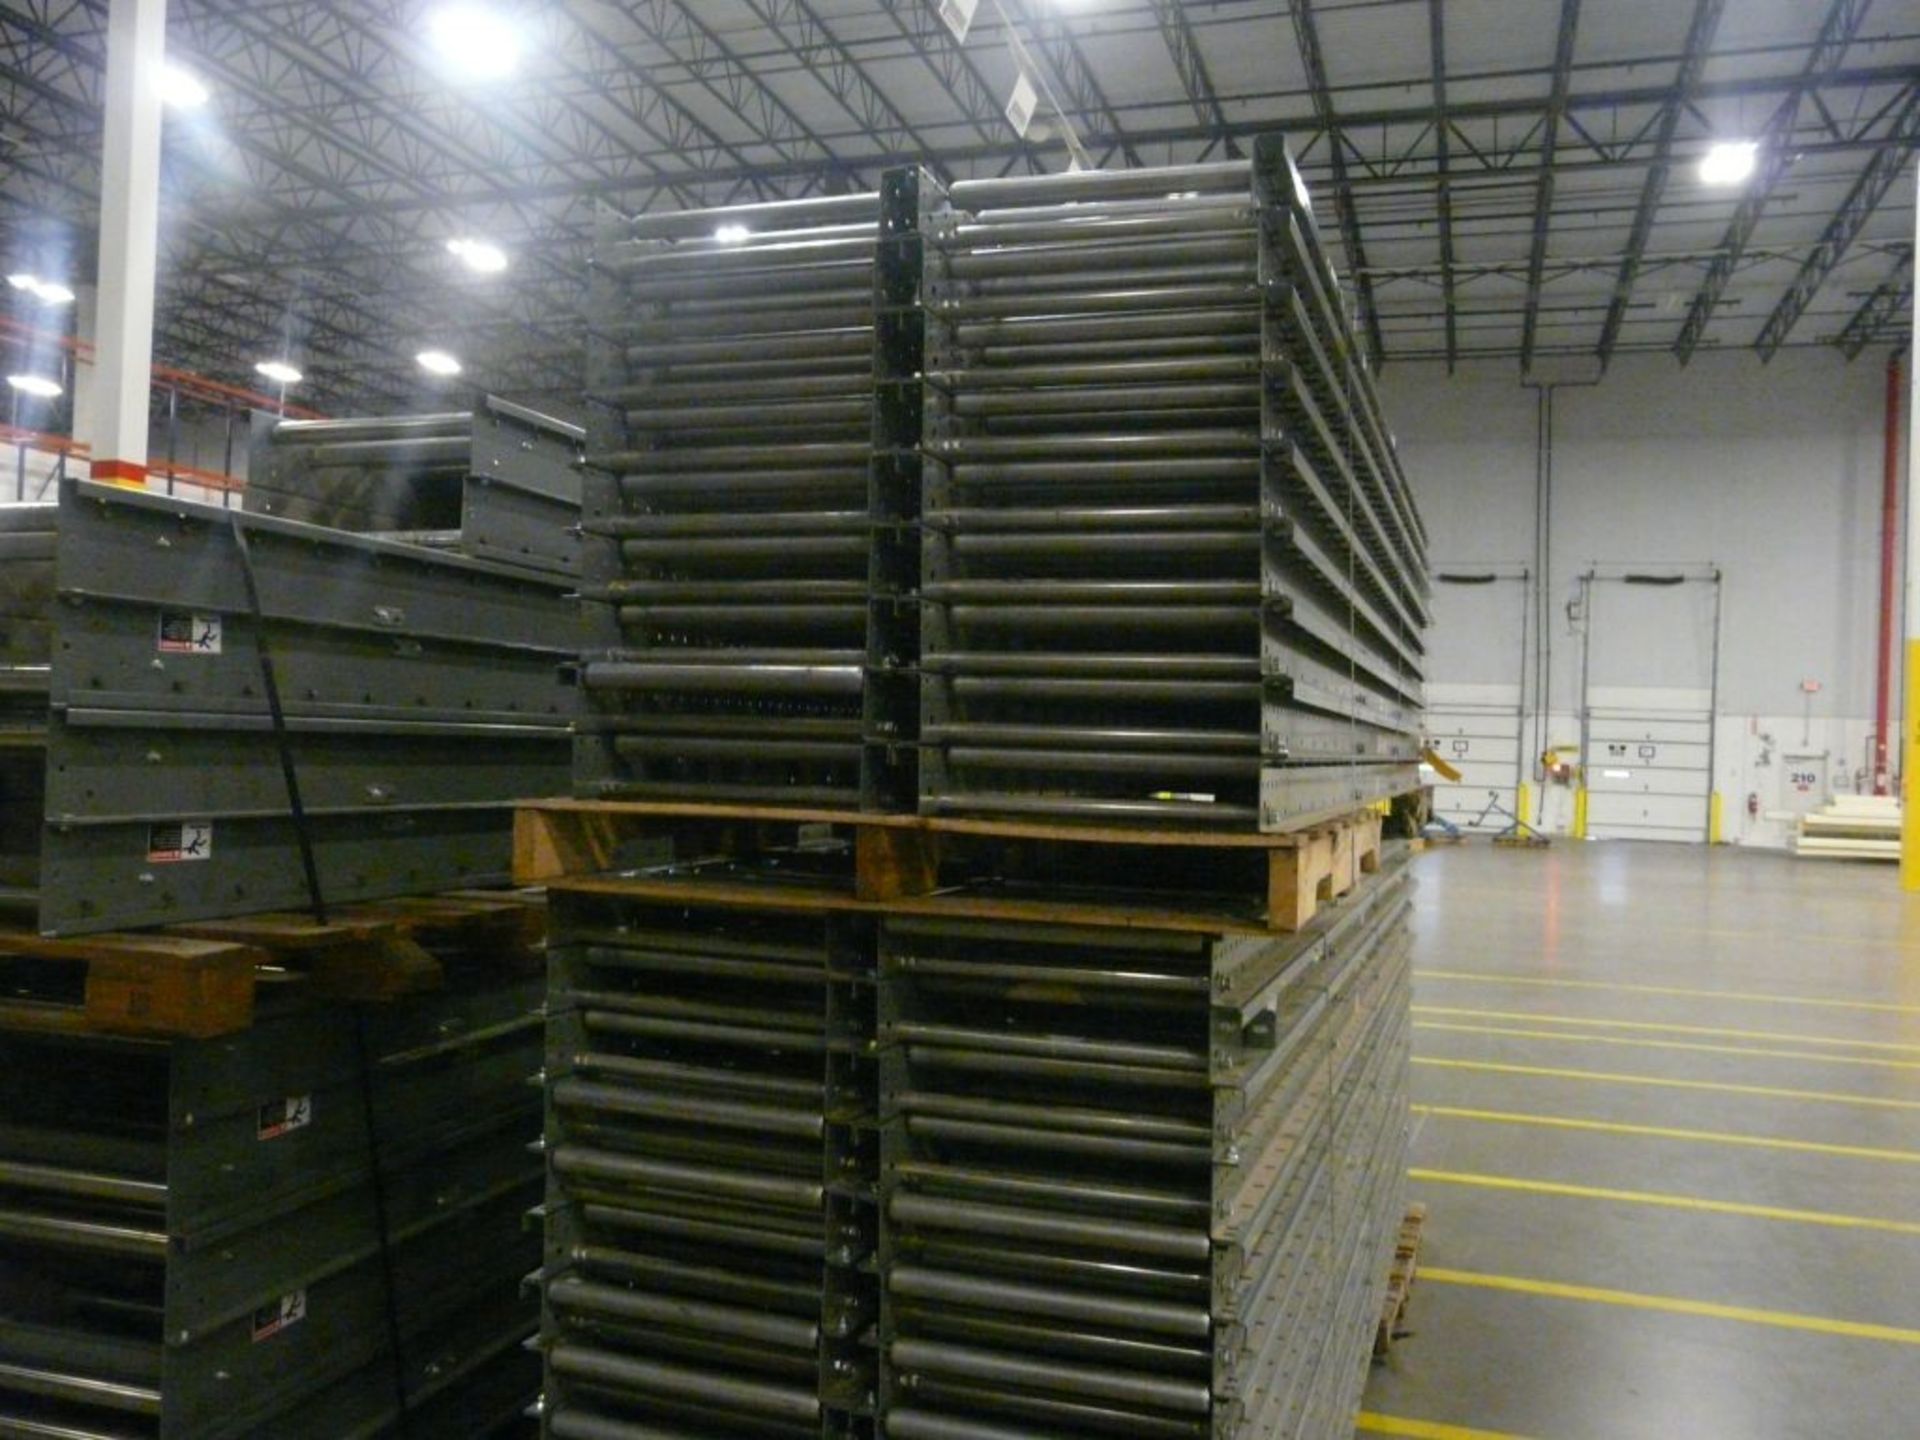 Lot of (12) 140 Belt Intermediate Conveyors - 12'L x 16"W; Tag: 223660 - $30 Lot Loading Fee - Image 2 of 3